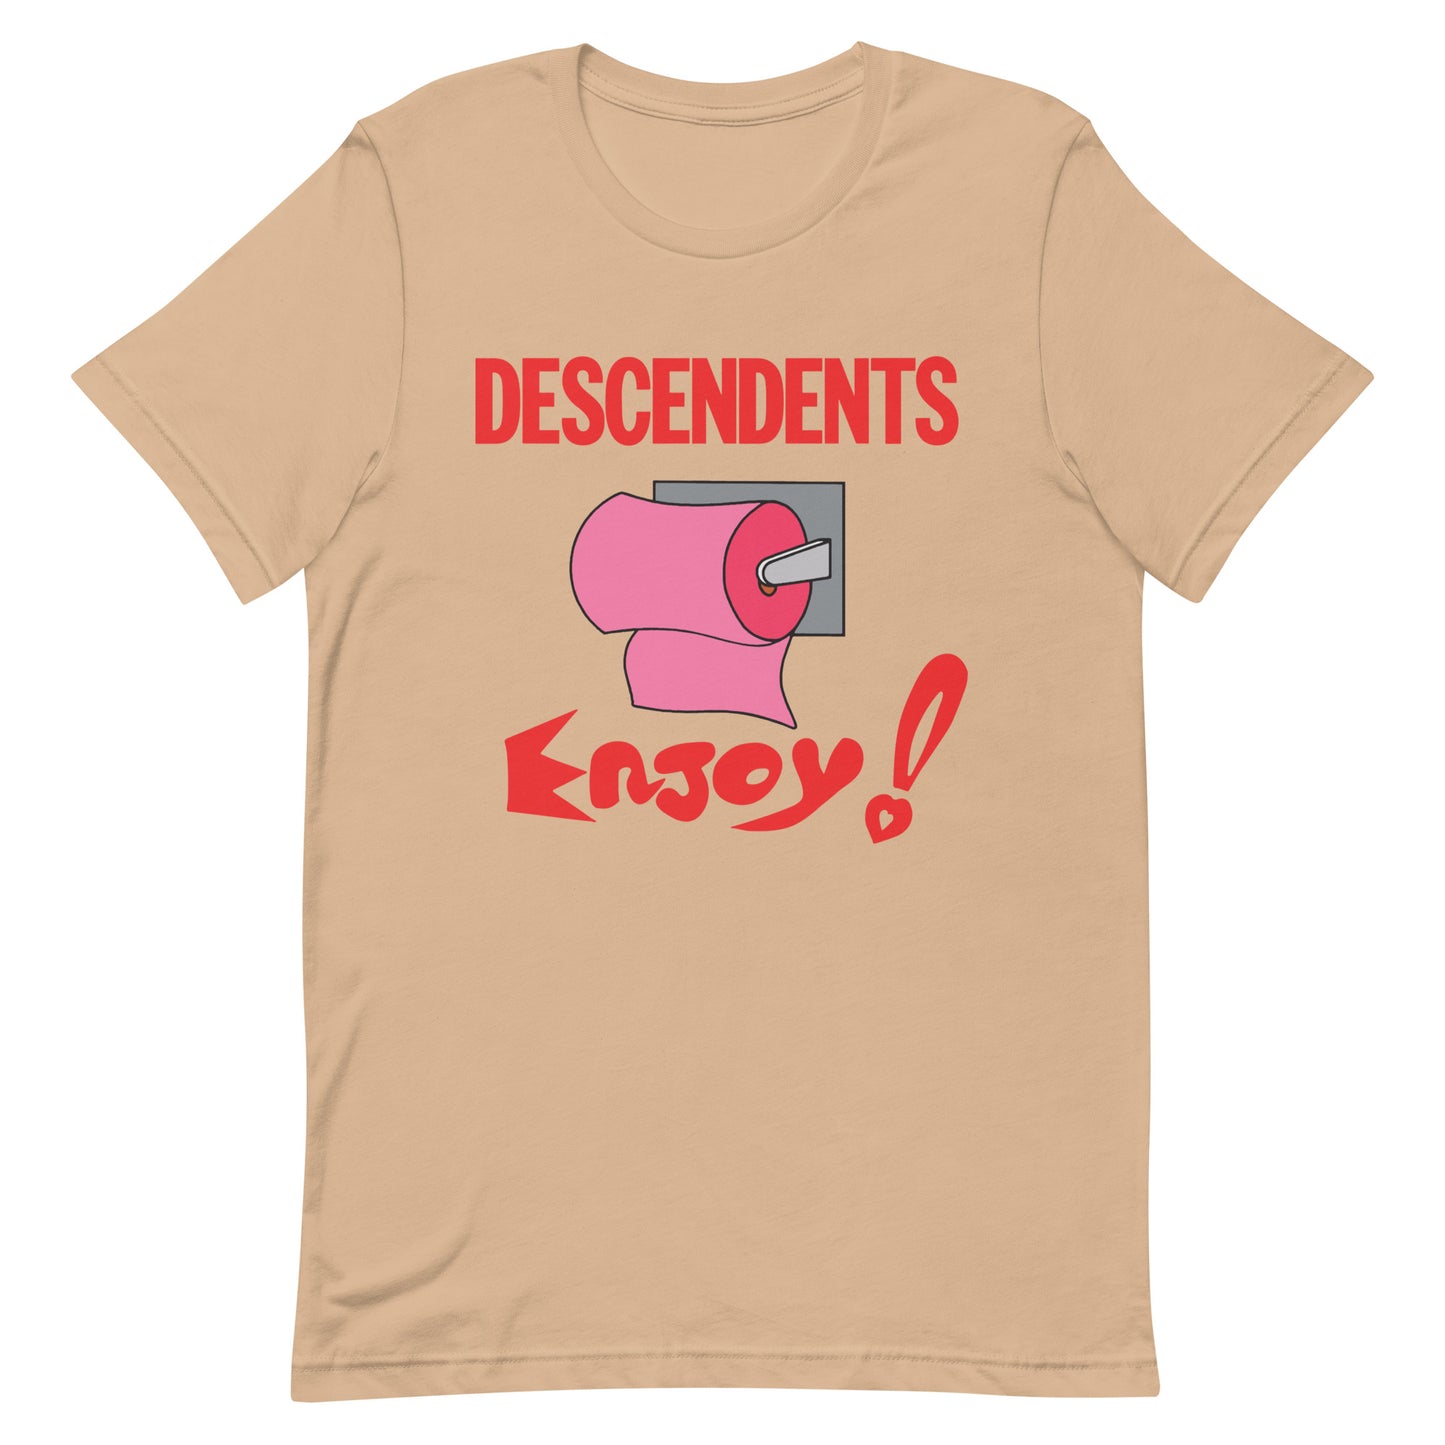 Descendent - Enjoy! T-Shirt